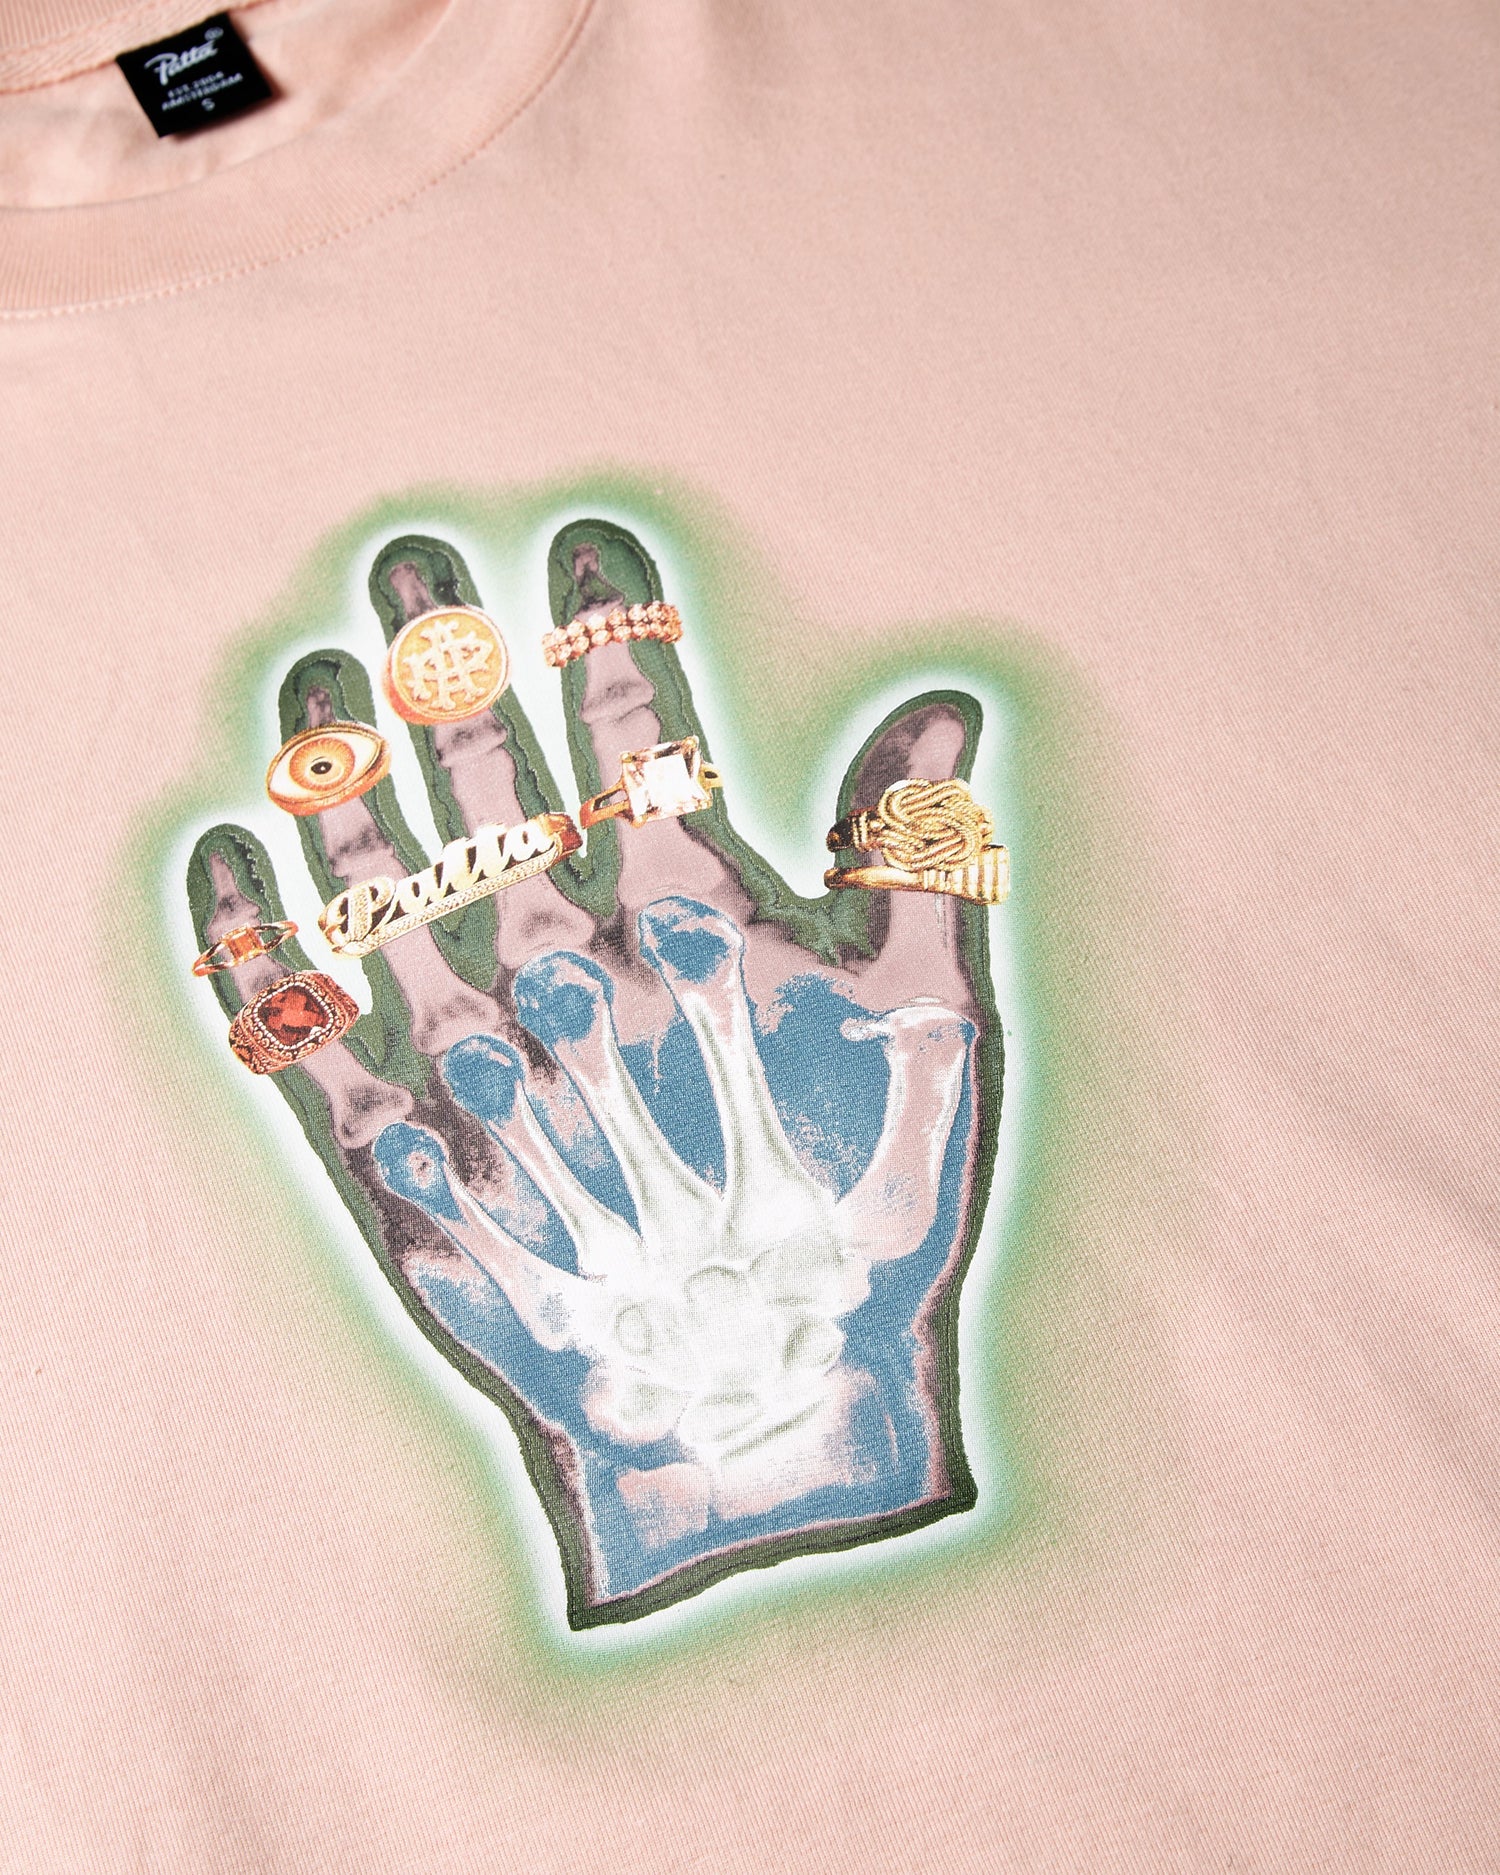 Patta Healing Hands T-Shirt (Lotus)